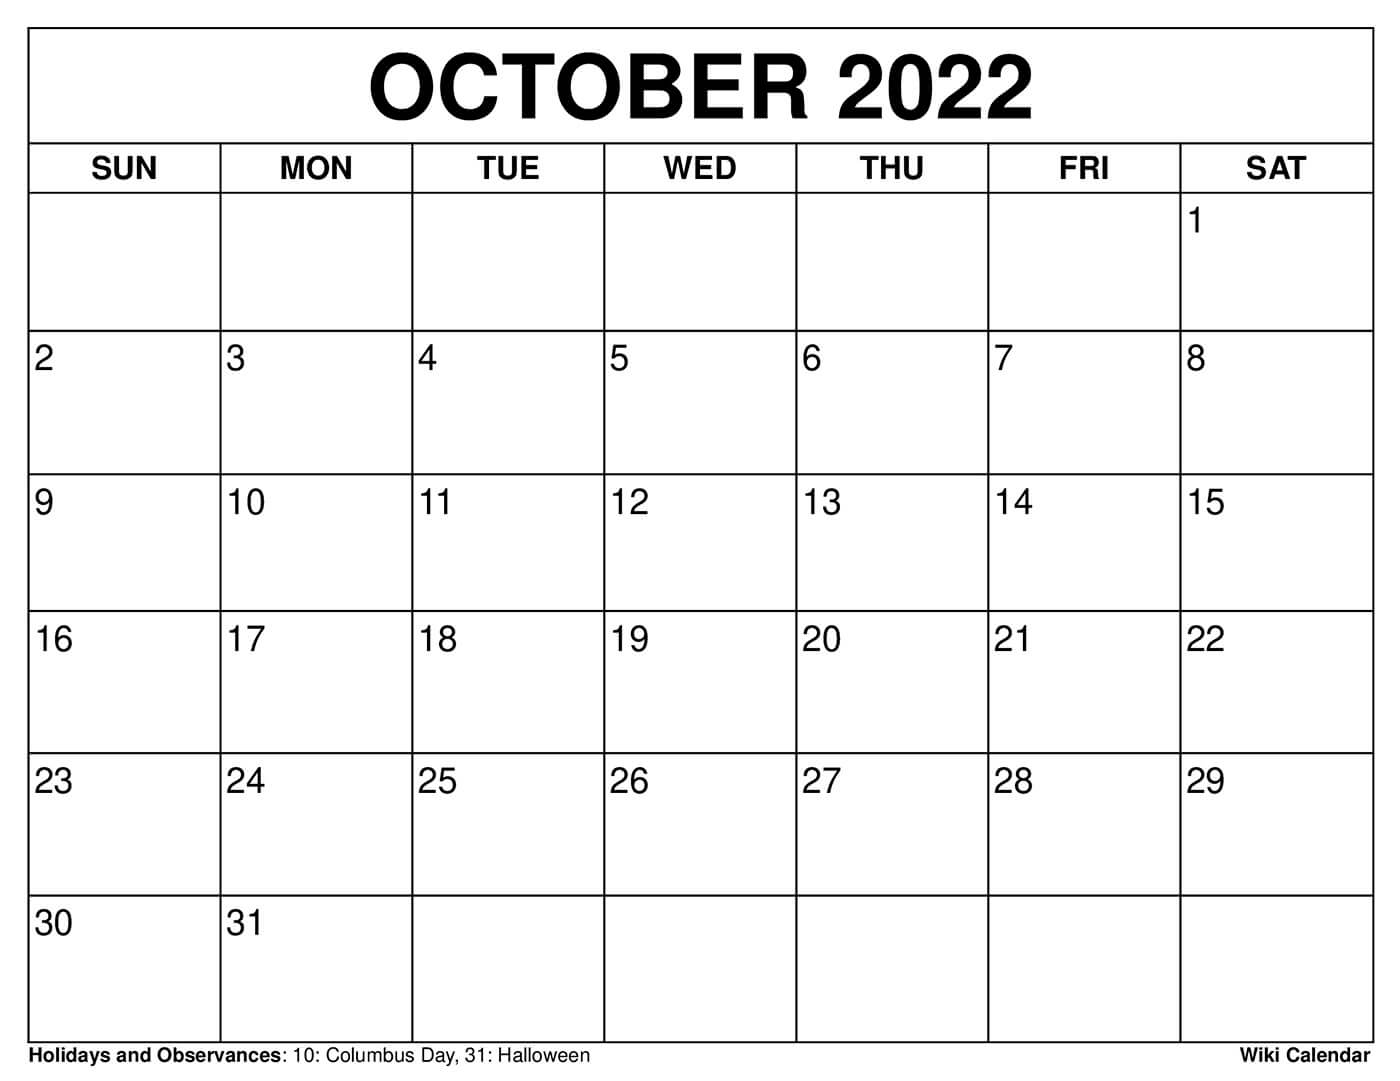 October 2022 Calendar To Print Free Printable October 2022 Calendars - Wiki Calendar